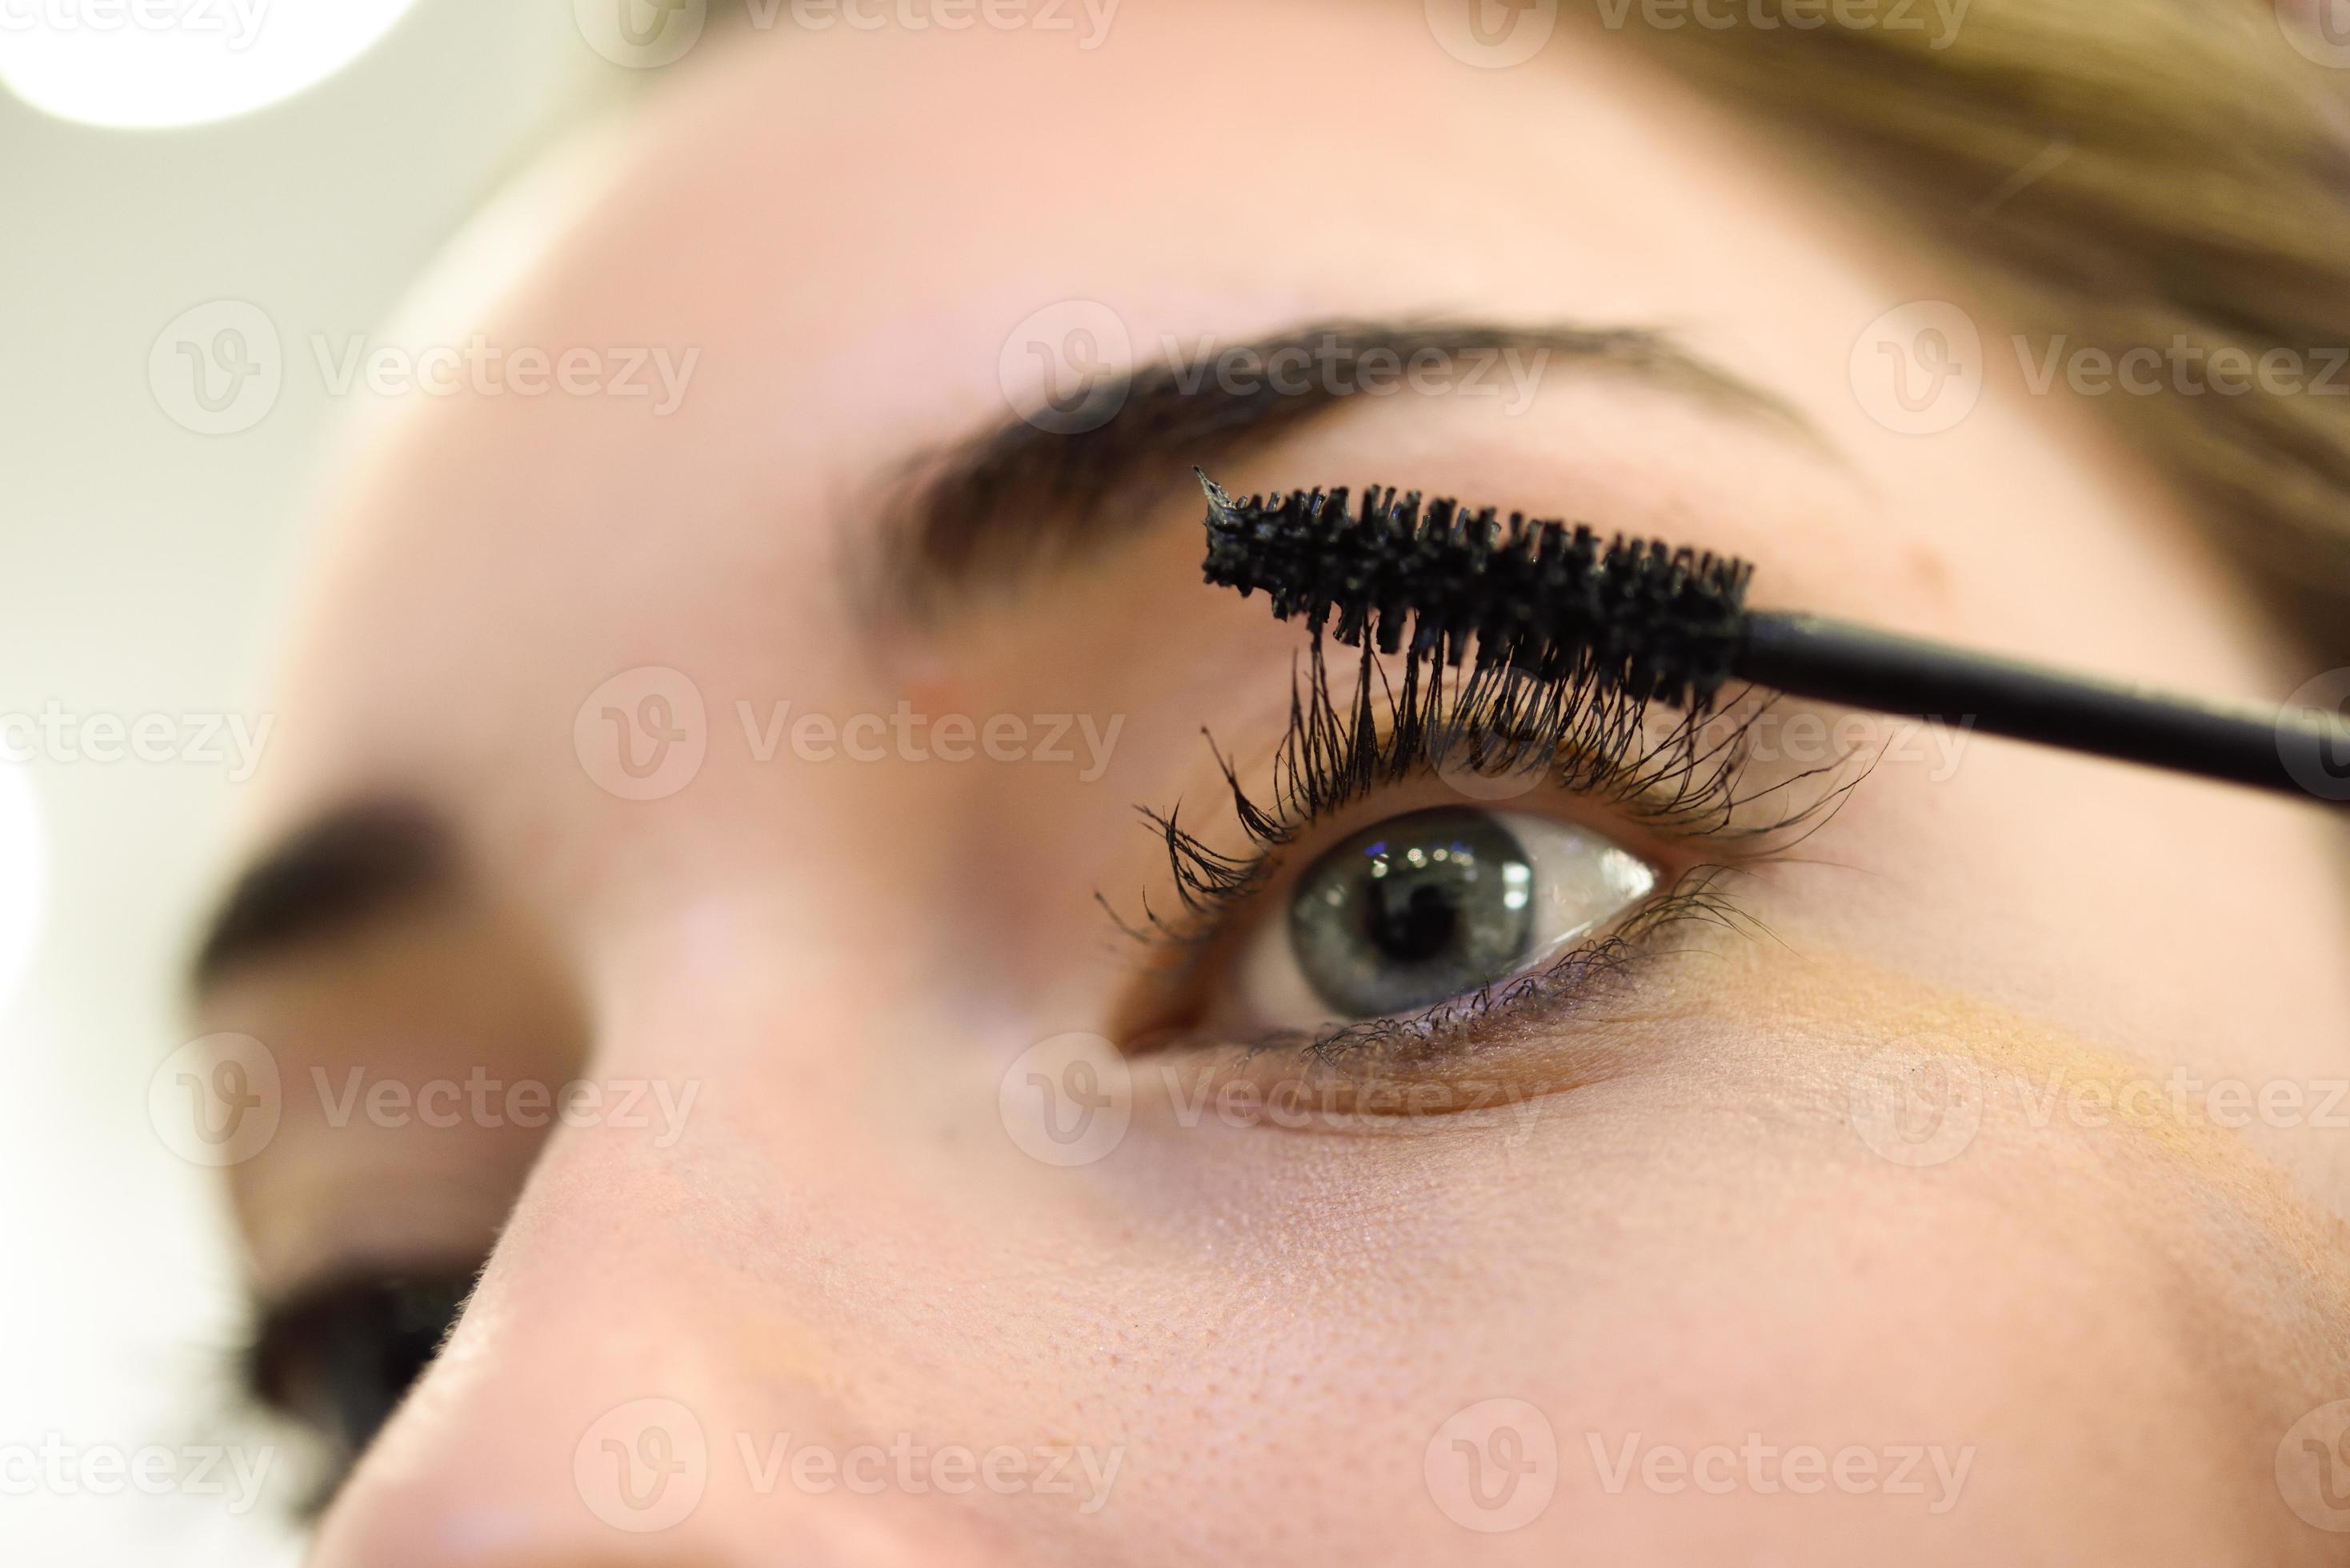 Menina maquiar os olhos com rímel